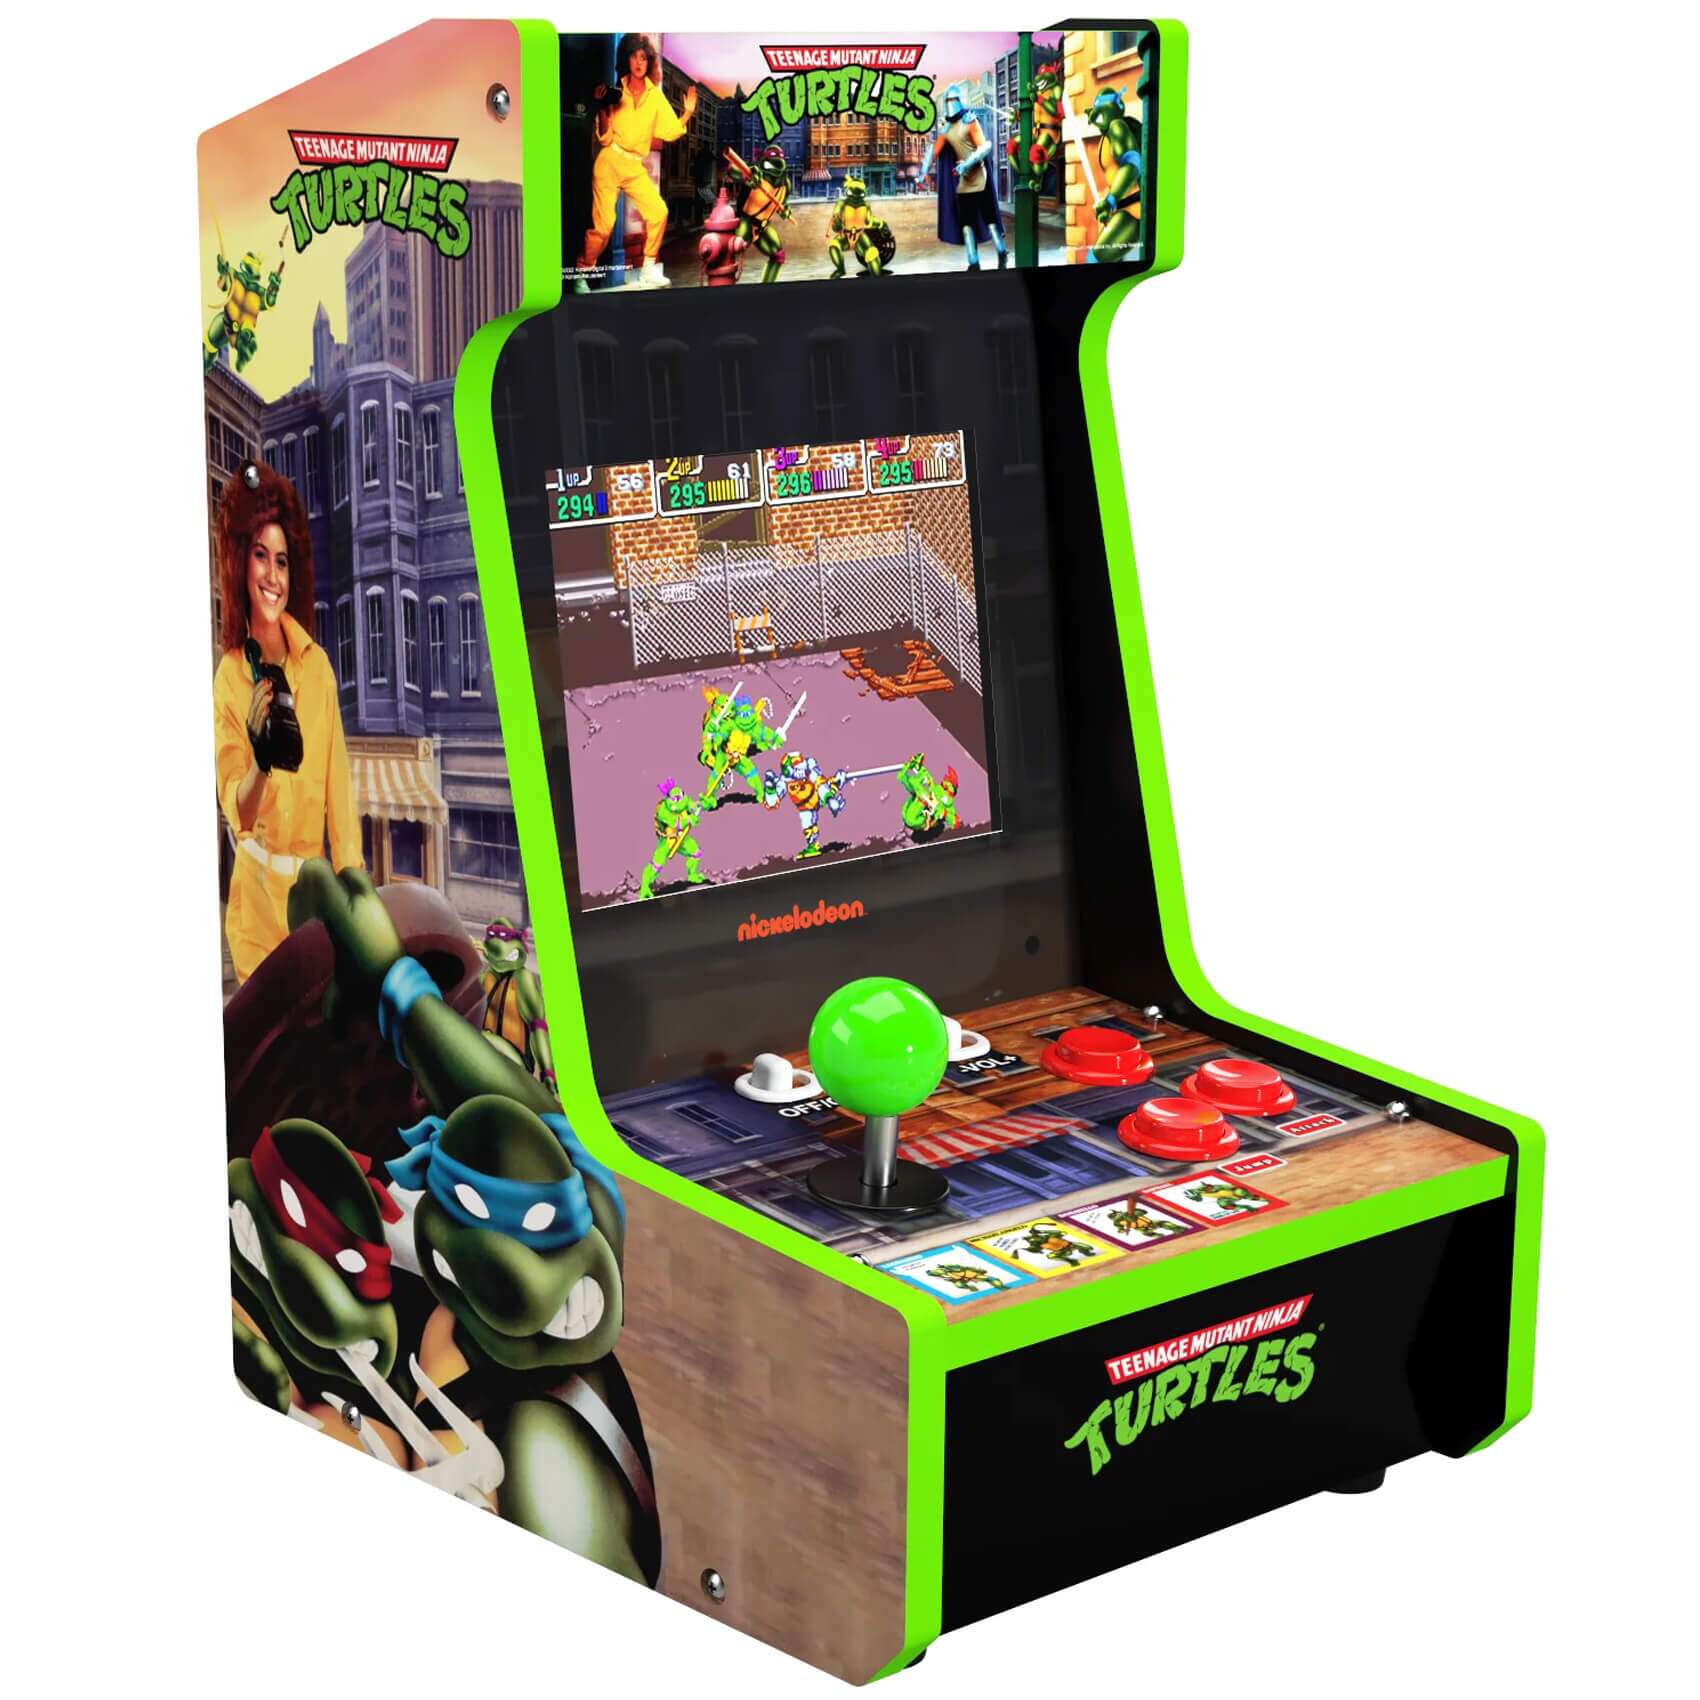 Arcade1up teenage mutant ninja turtles countercade arcade játékgép